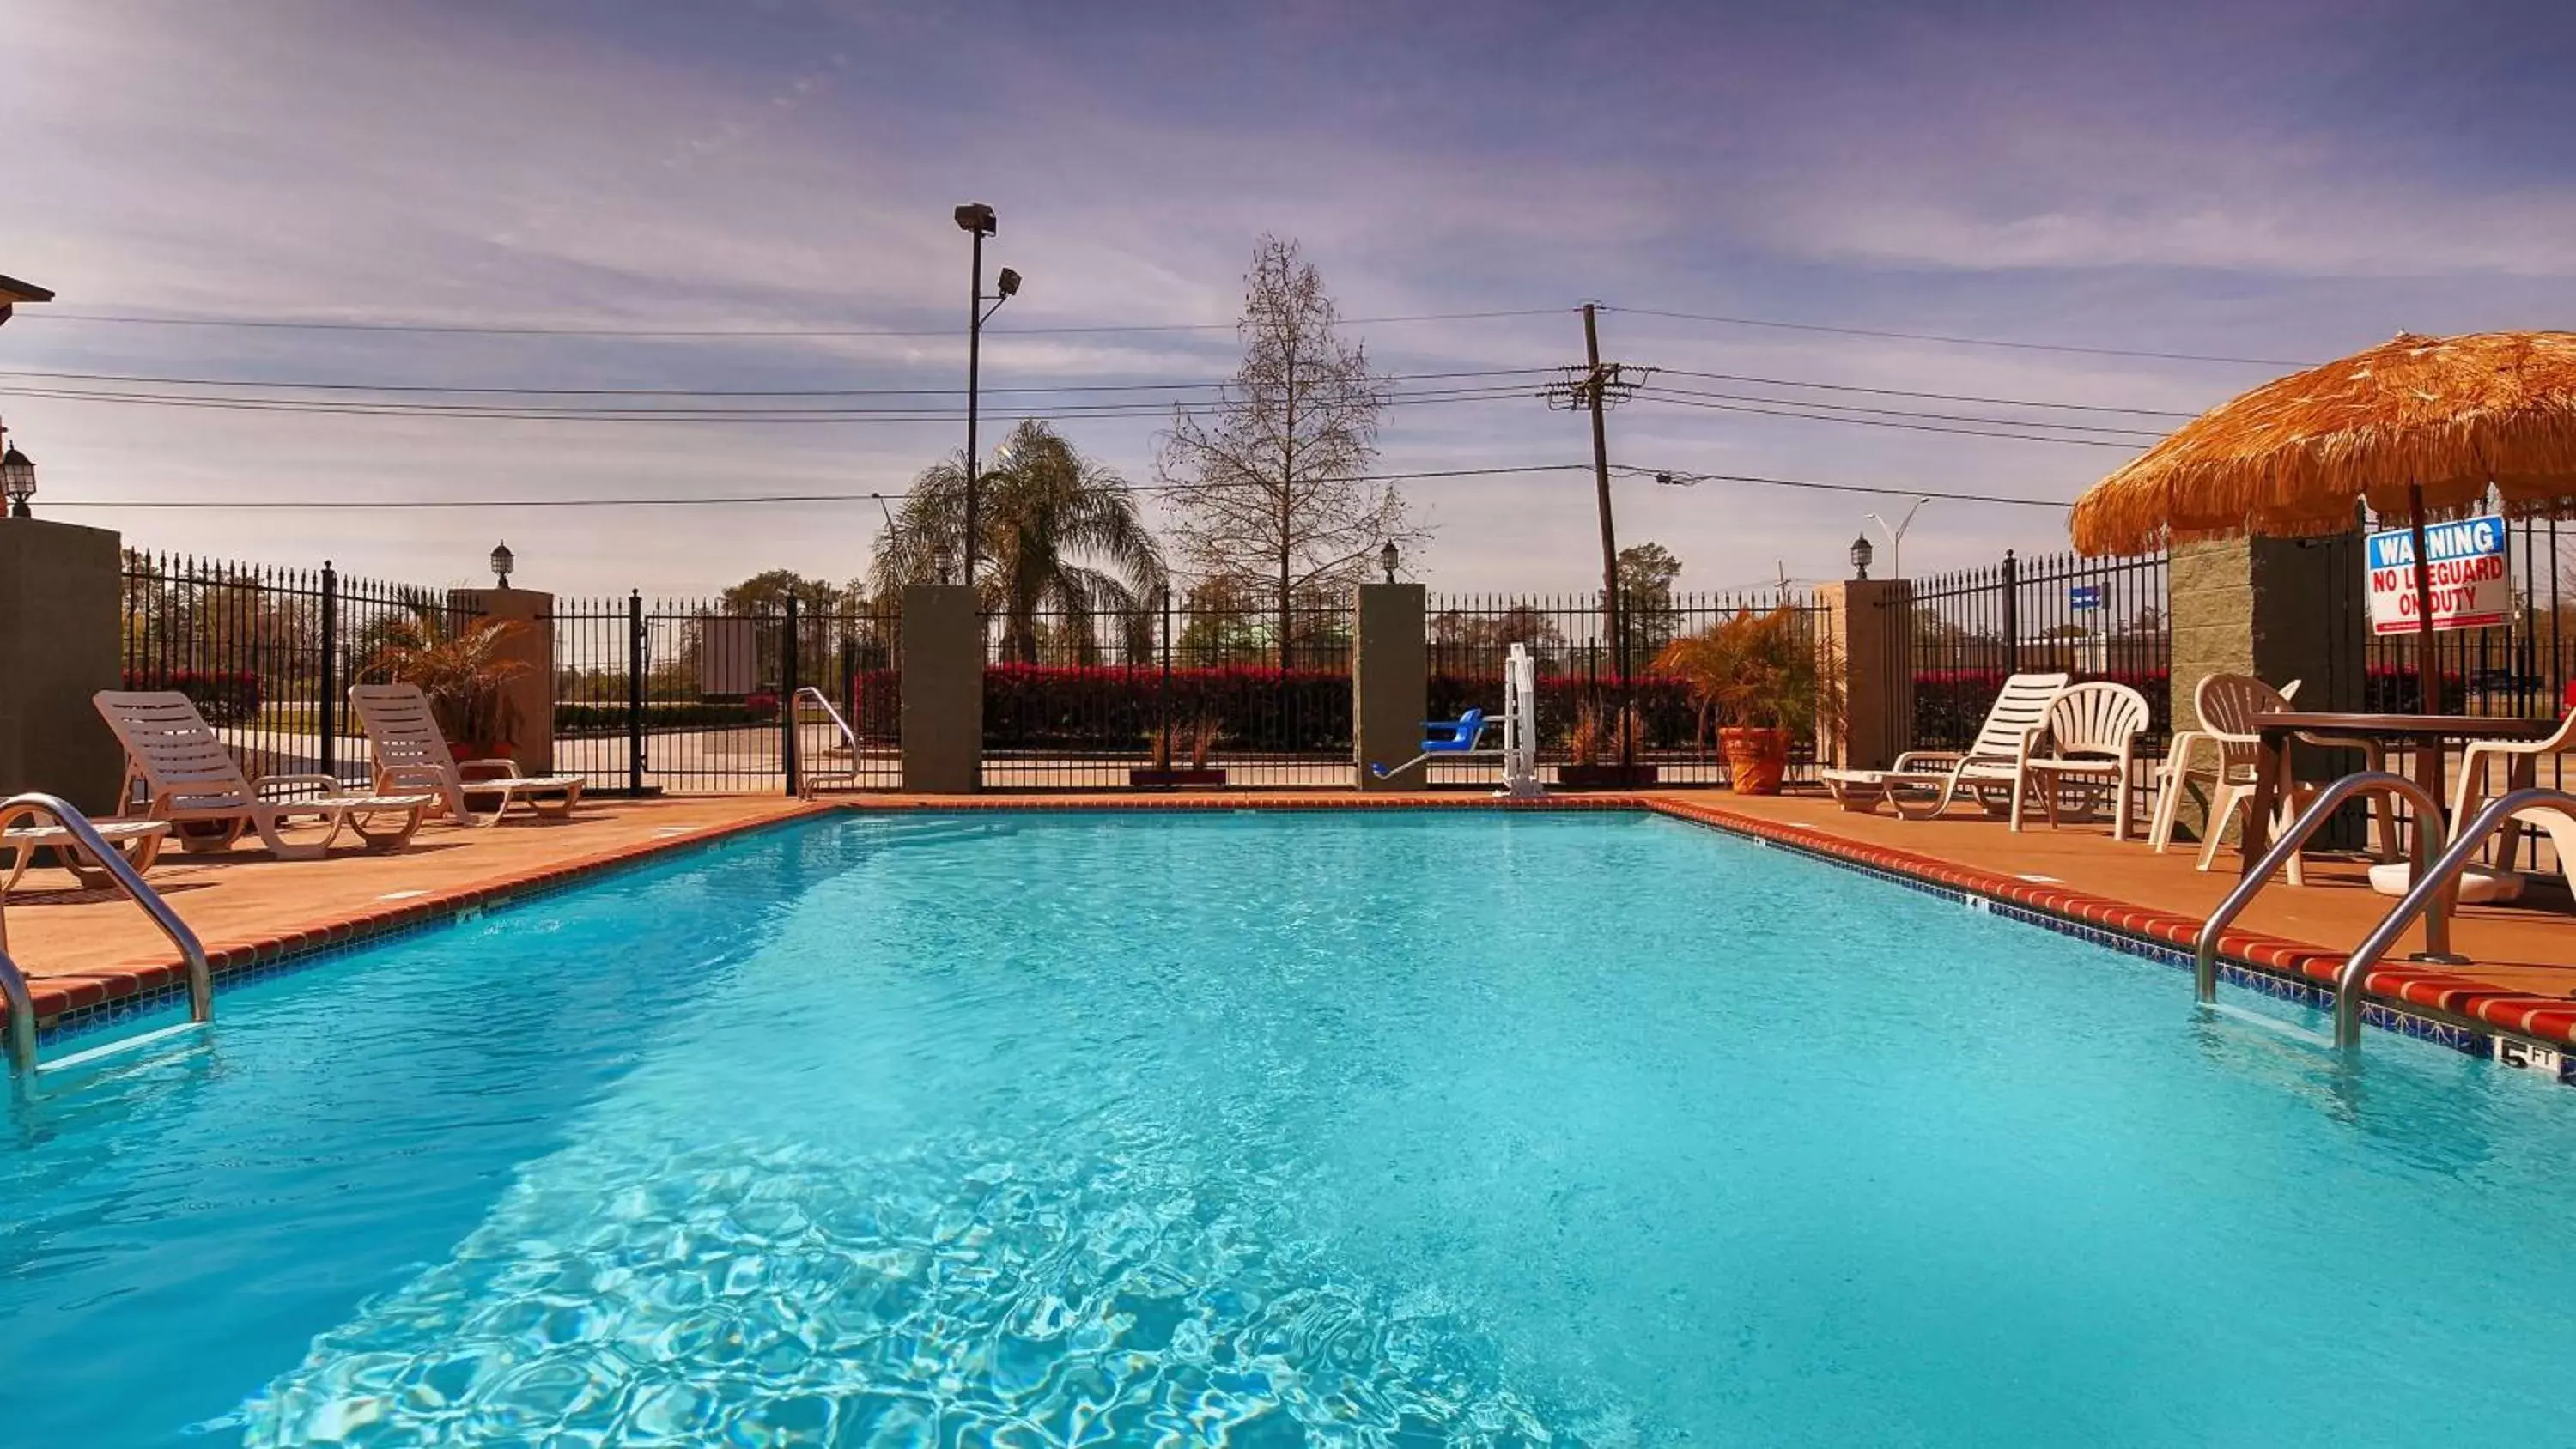 On site, Swimming Pool in Best Western Bayou Inn